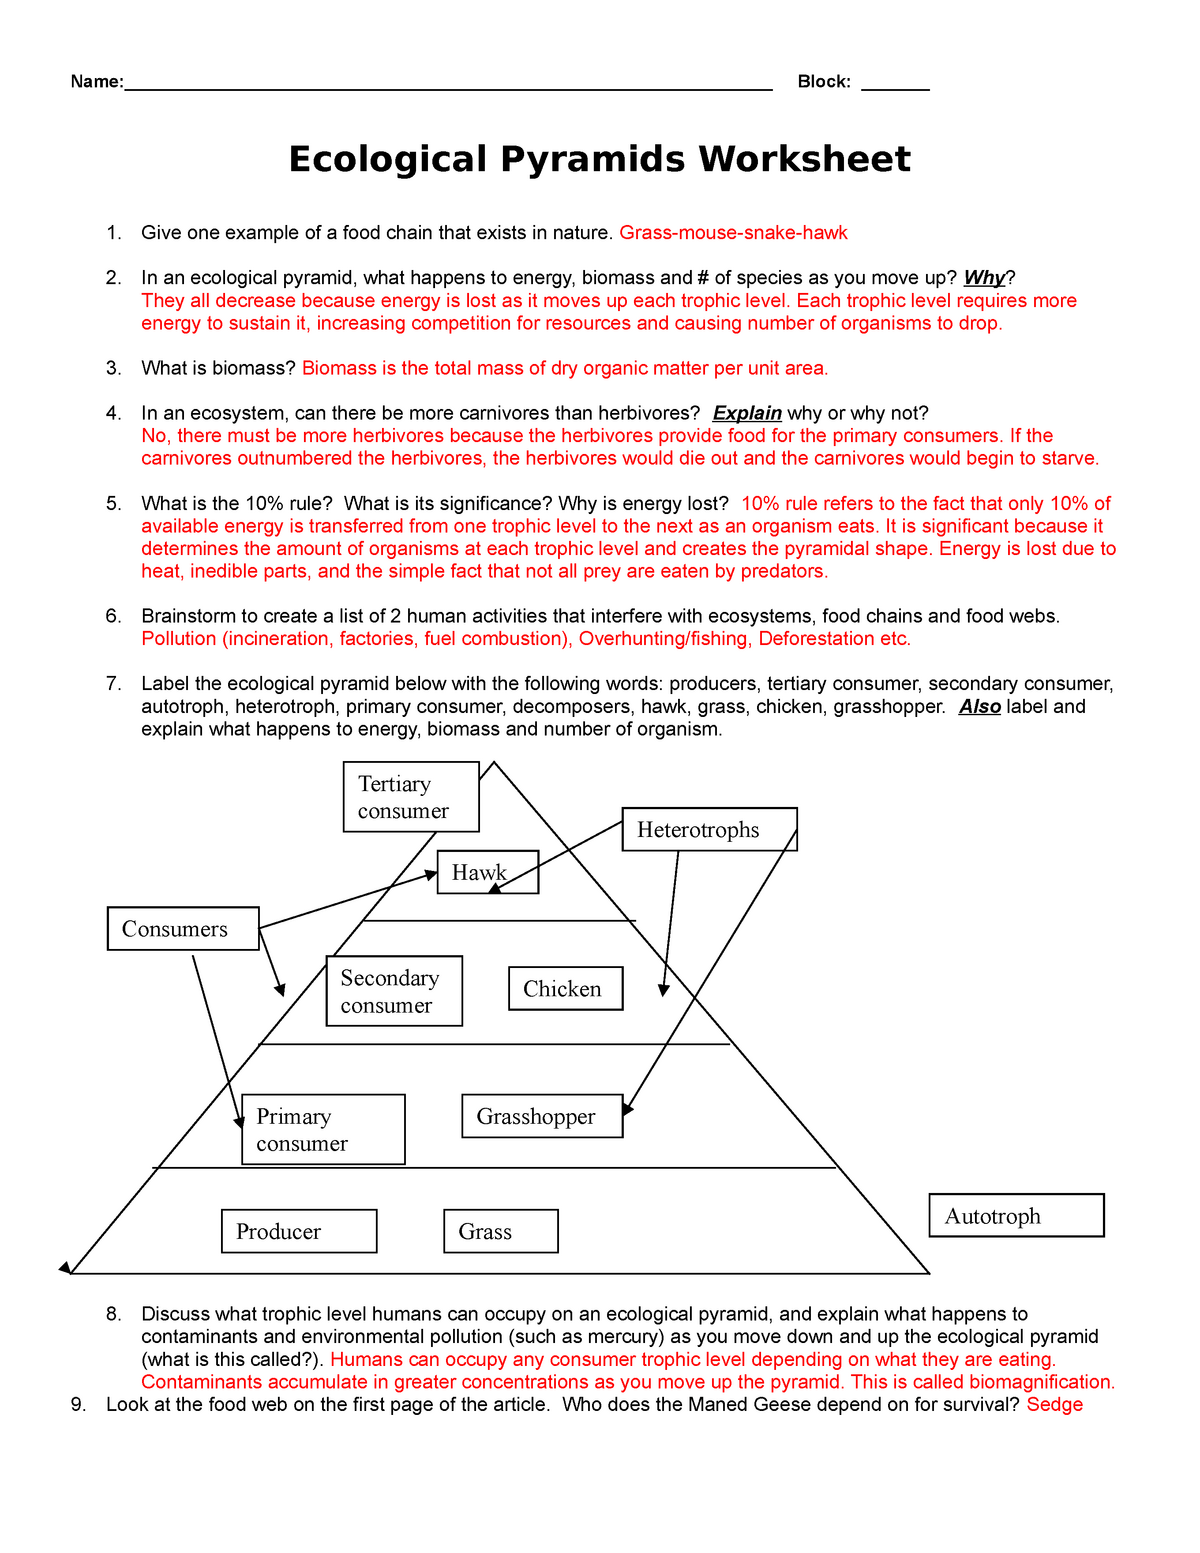 KEY ecological-pyramids-worksheet 21 - LIFESCI 21P021 - McMaster For Ecological Pyramids Worksheet Answer Key